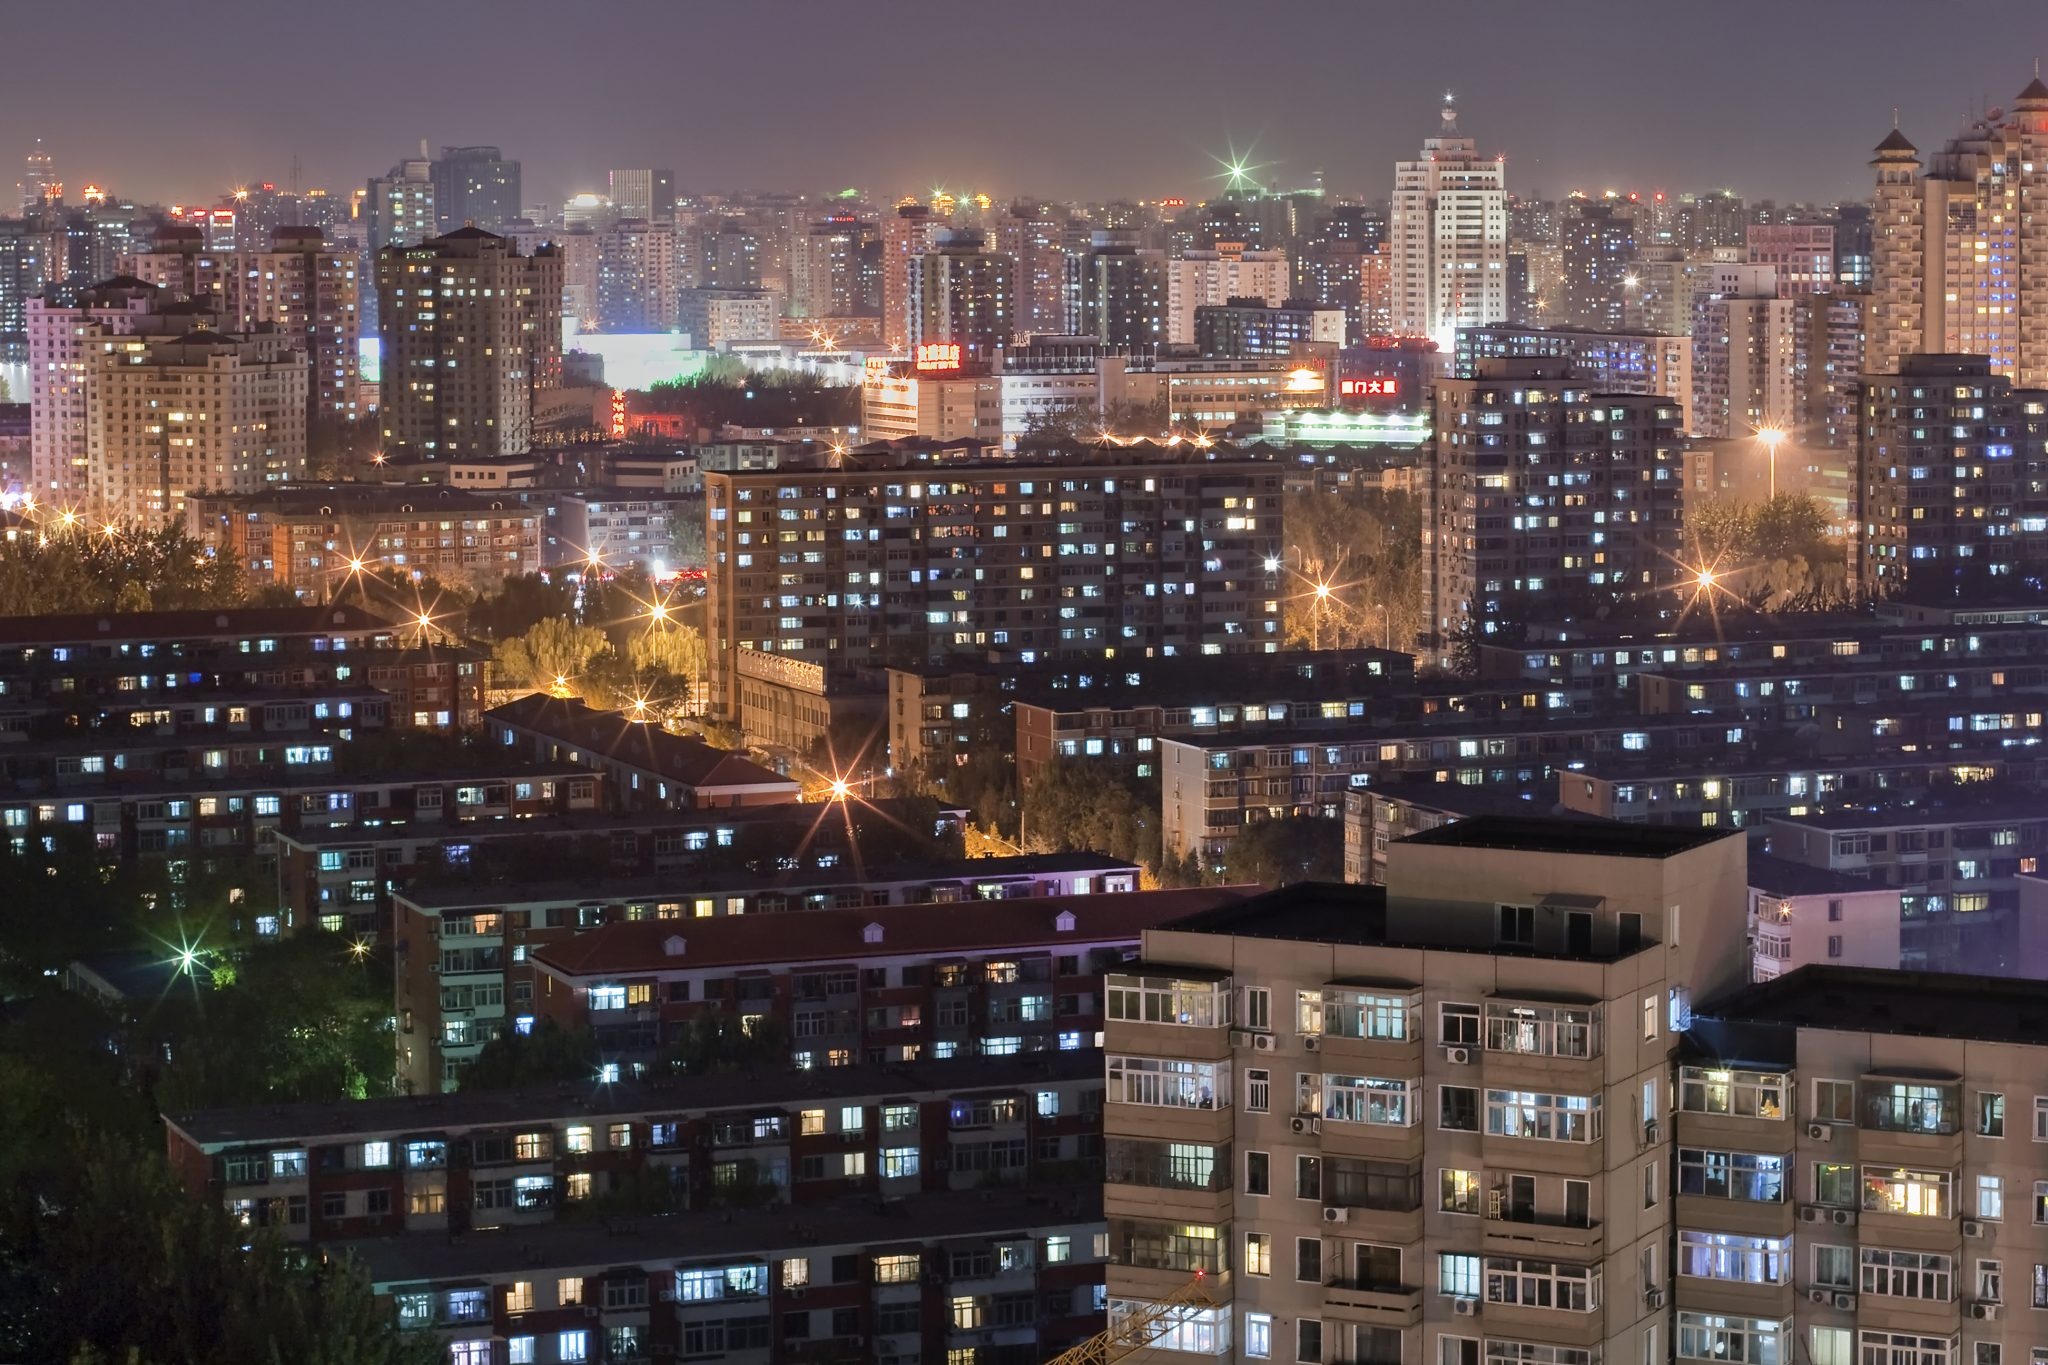 The skyline of Beijing. Photo: TonyV3112 / Shutterstock